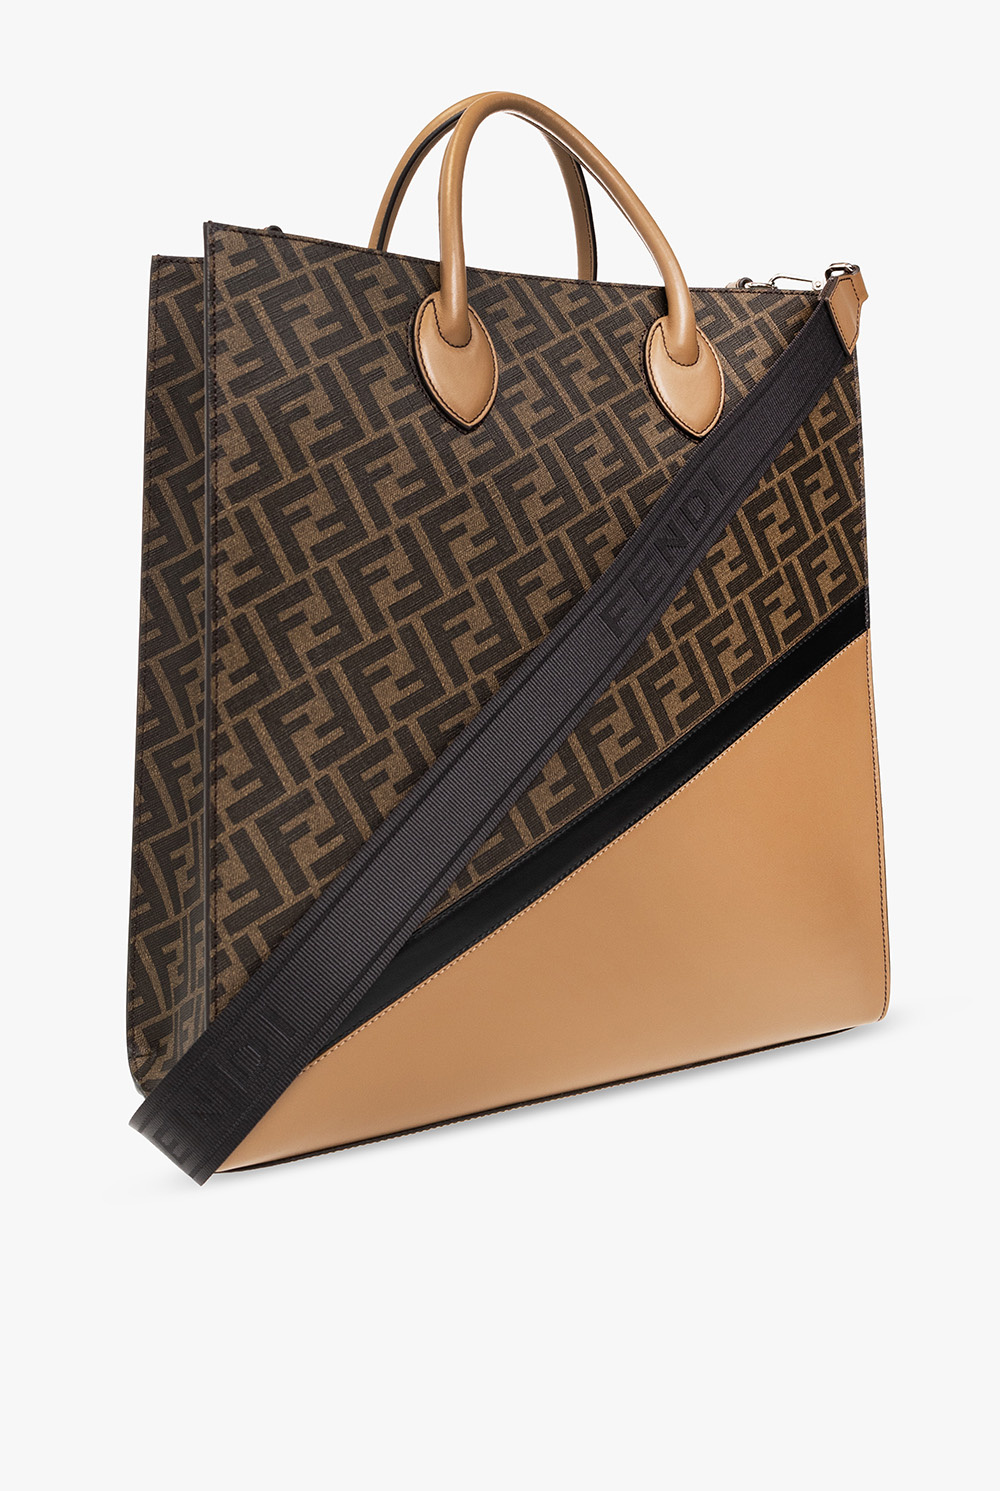 Fendi ‘Vertical’ shopper bag